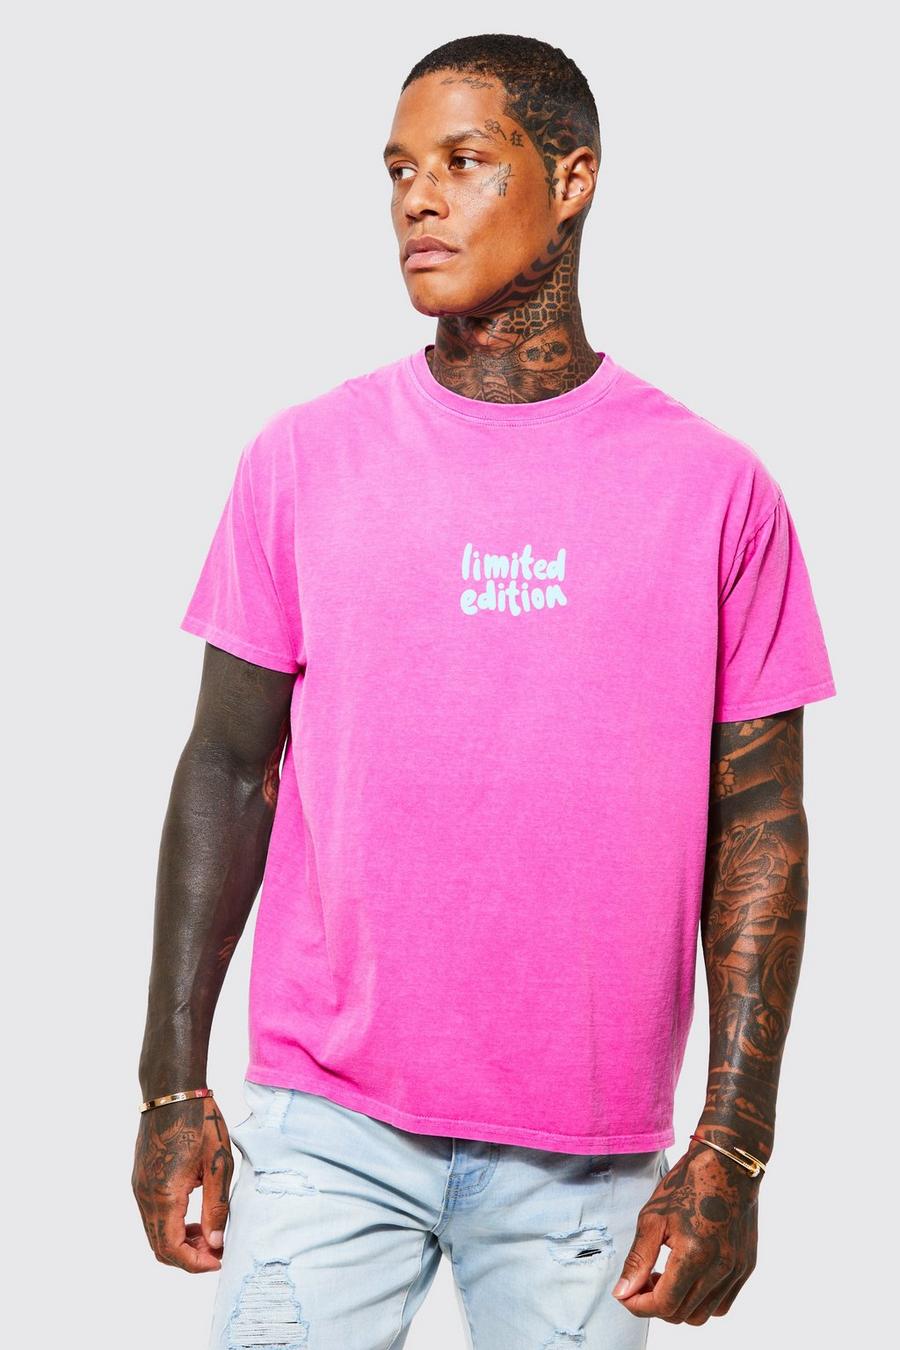 T-shirt oversize sovratinta Limited Edition, Pink rosa